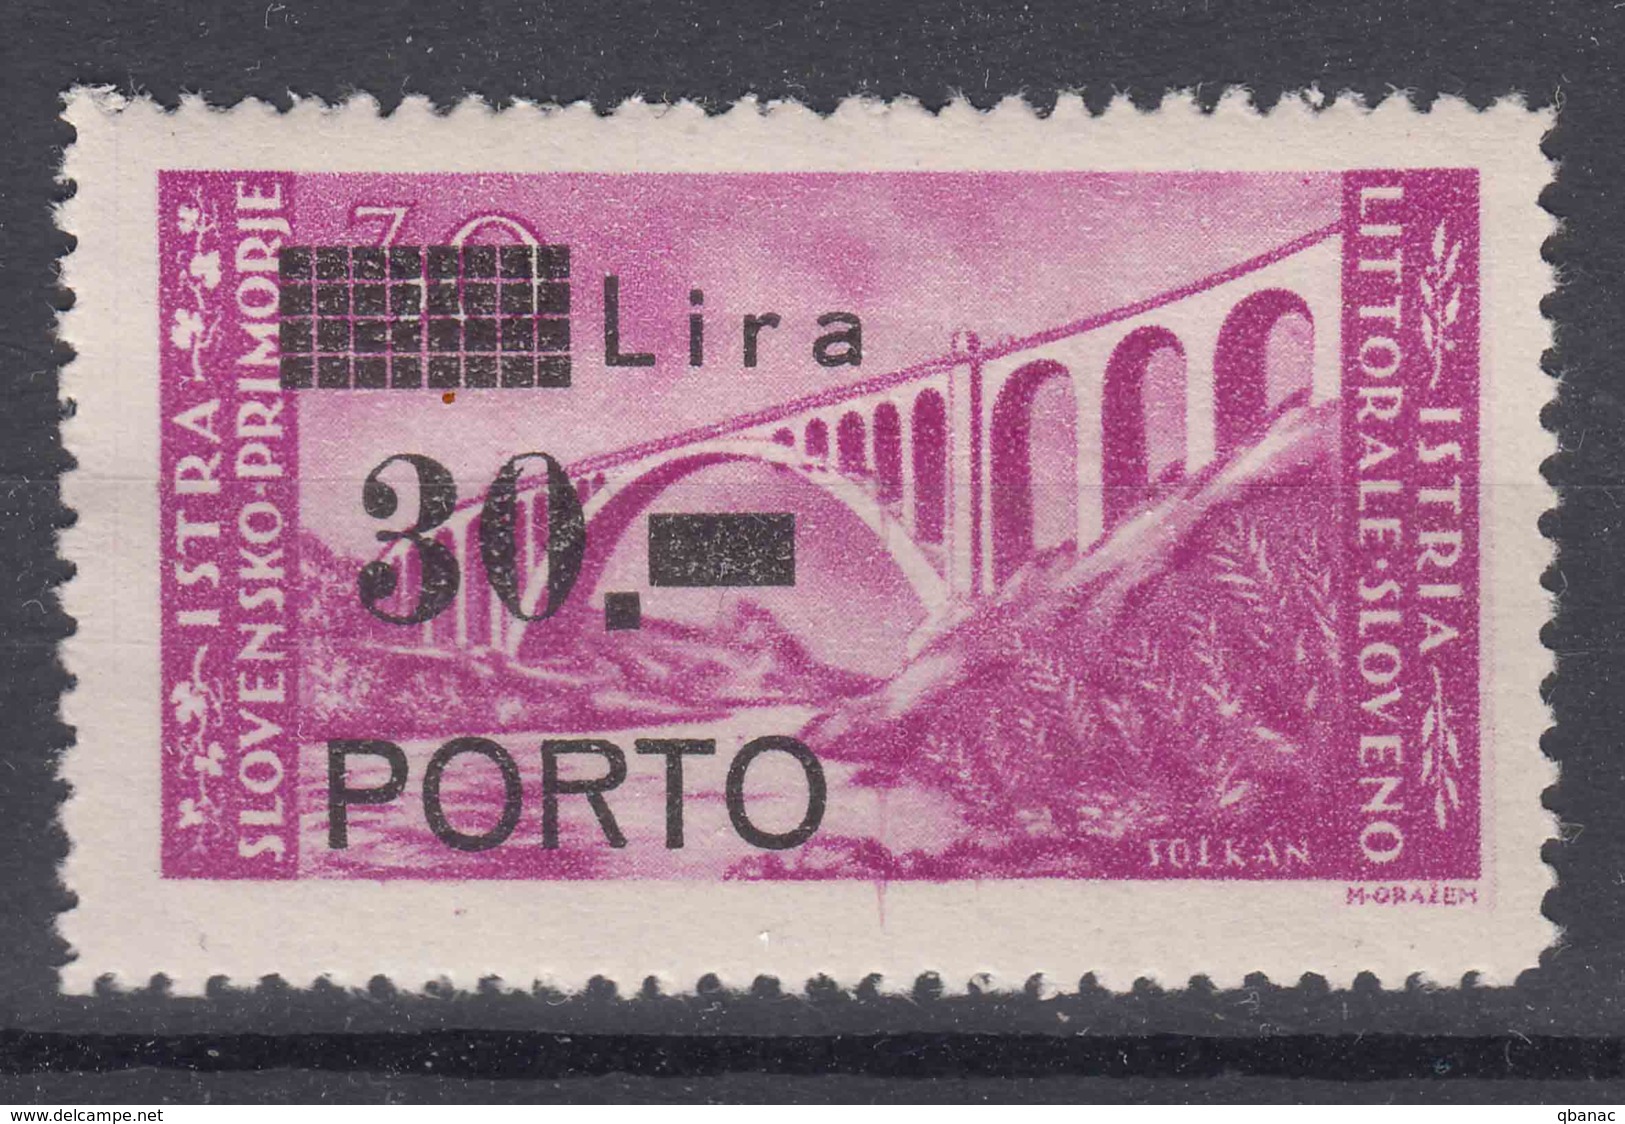 Istria Litorale Yugoslavia Occupation, Porto 1946 Sassone#13 Mint Hinged - Occ. Yougoslave: Istria